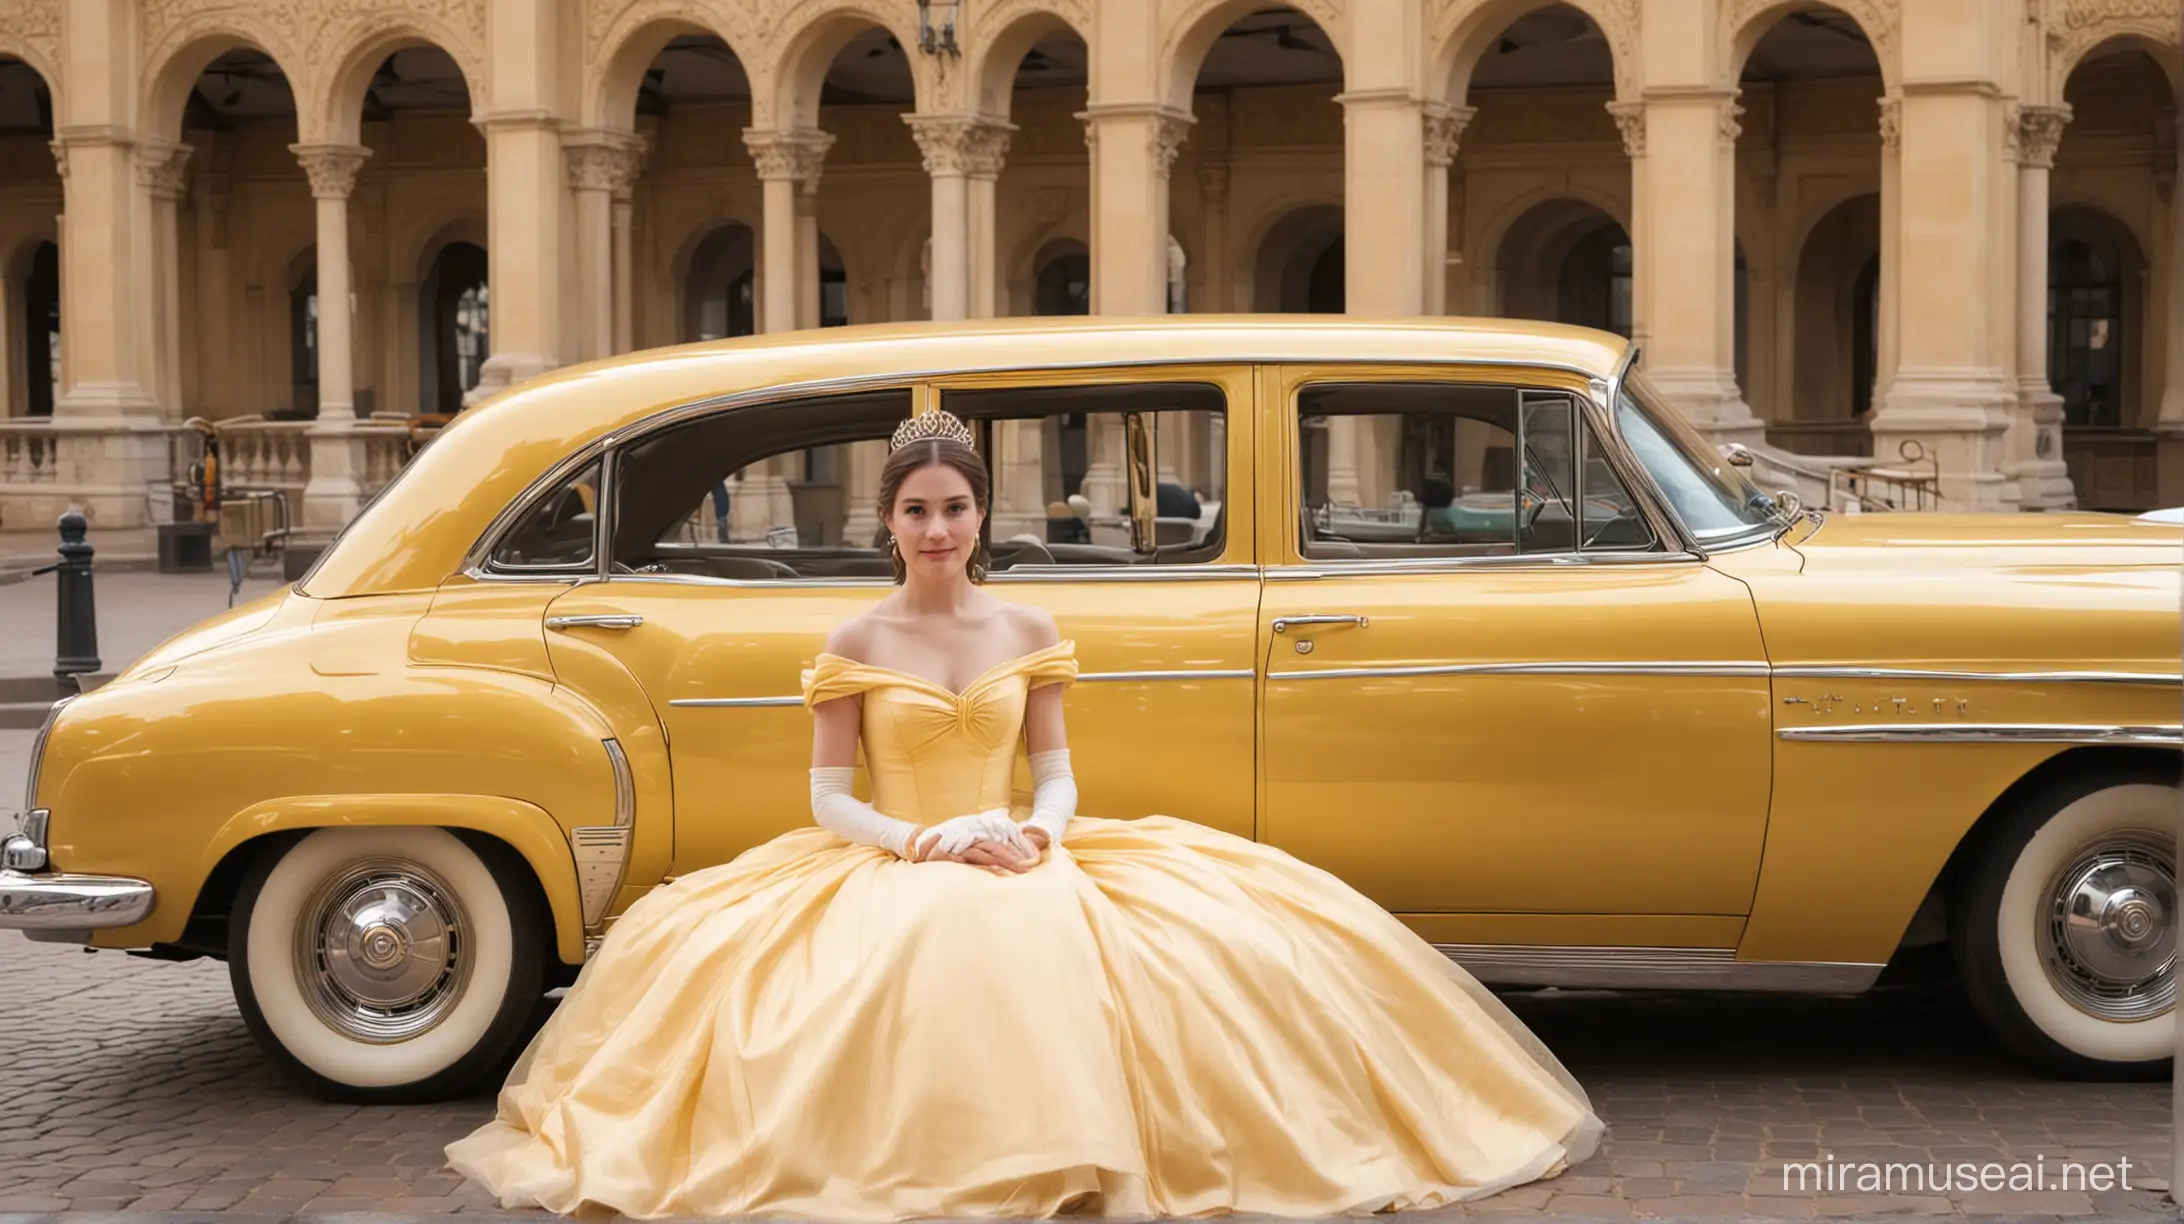 Golden Car Princess Regal Royalty in Luxurious Ride